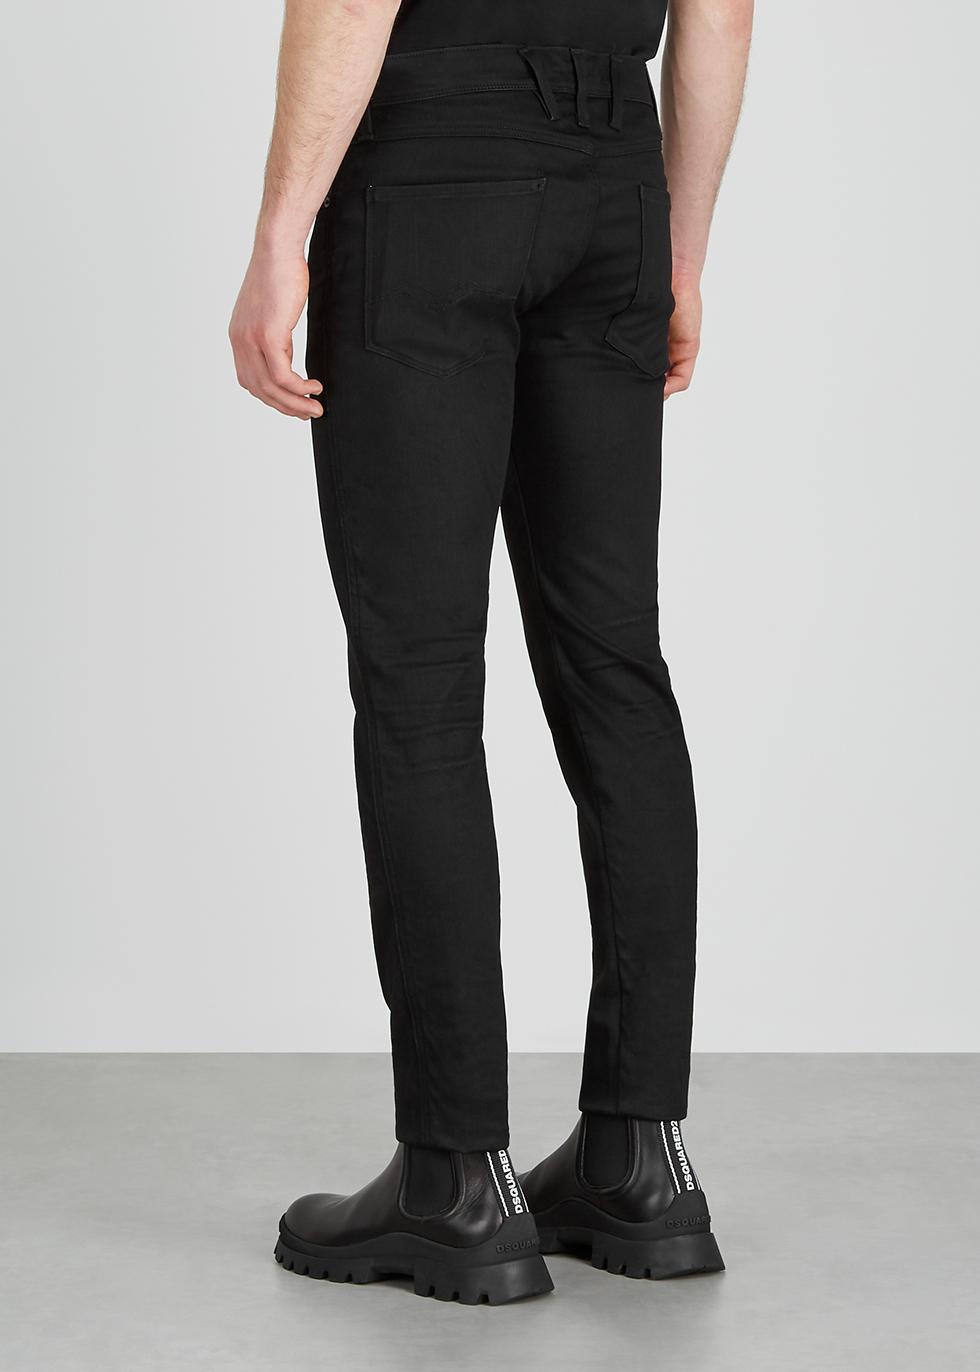 Replay Denim Anbass Hyperflex Black Slim-leg Jeans for Men - Lyst